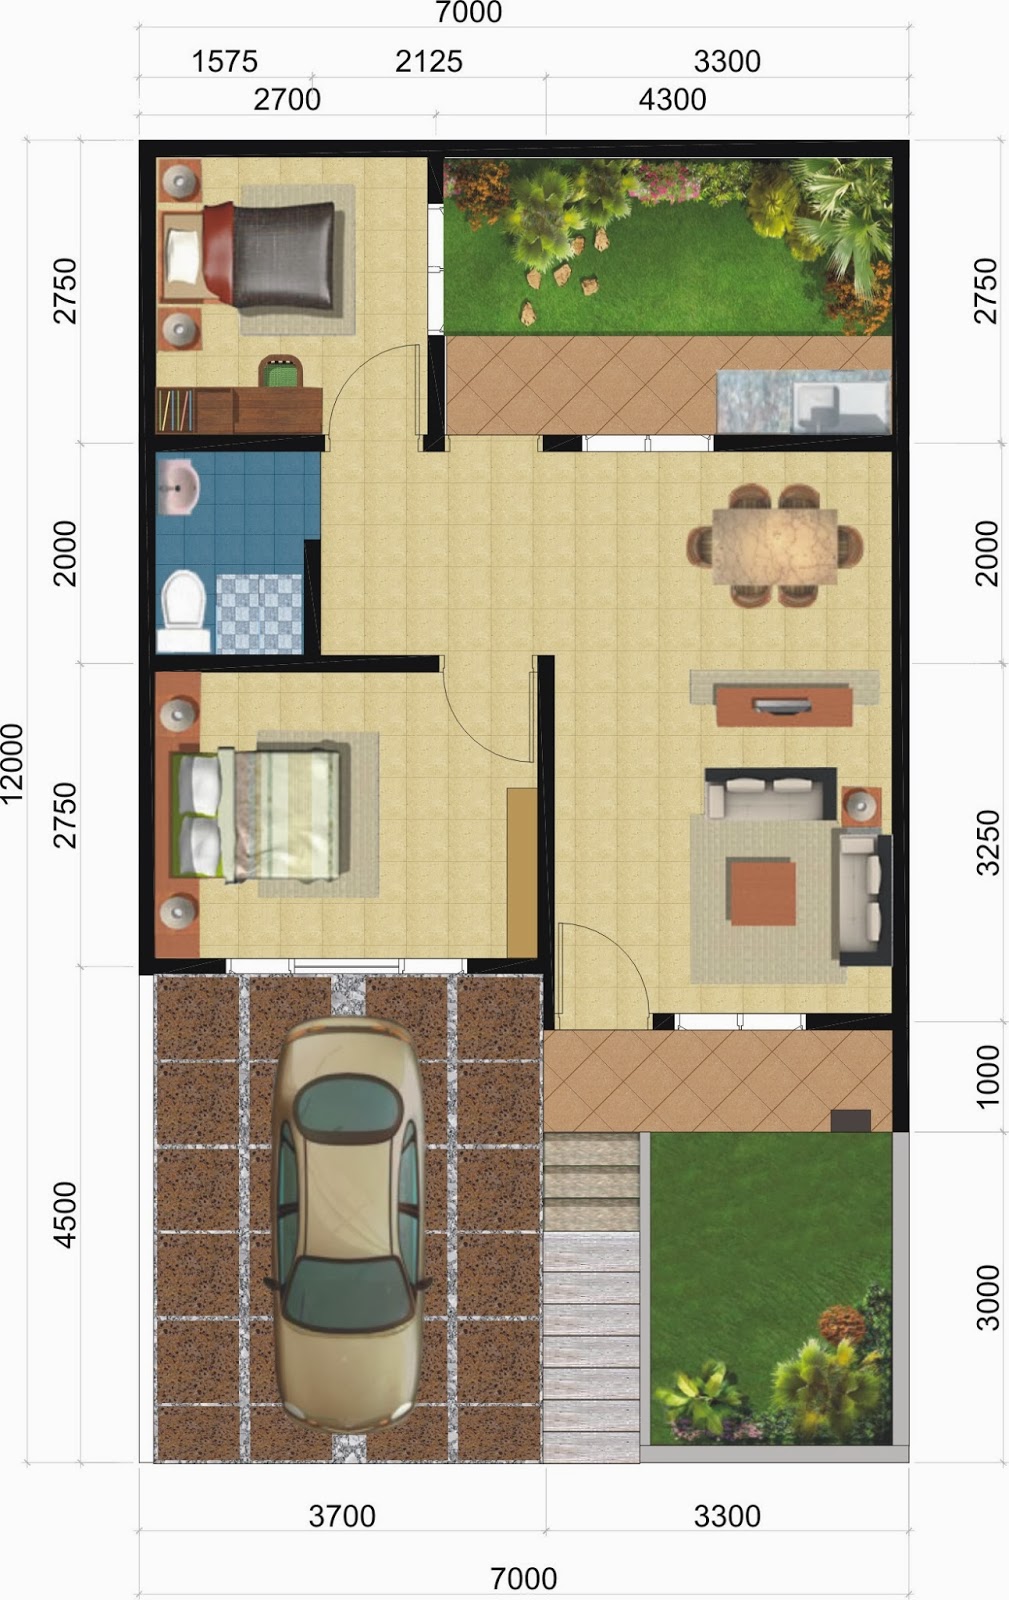 Kumpulan Desain Rumah Minimalis Ukuran 7x12 Kumpulan Desain Rumah